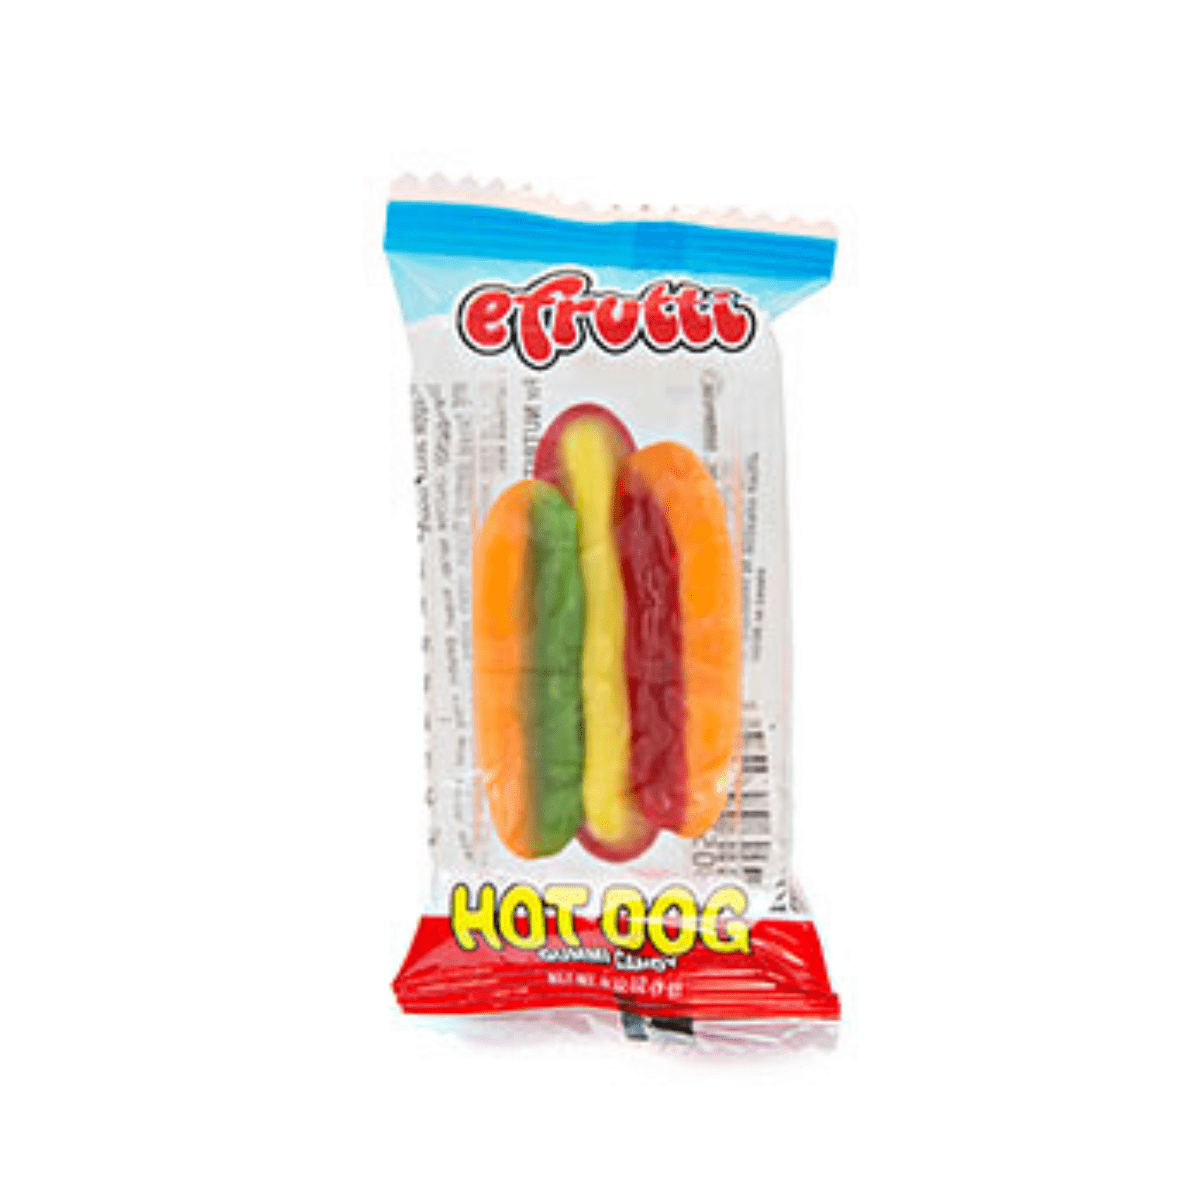 efrutti Gummi Hot dog, 9g